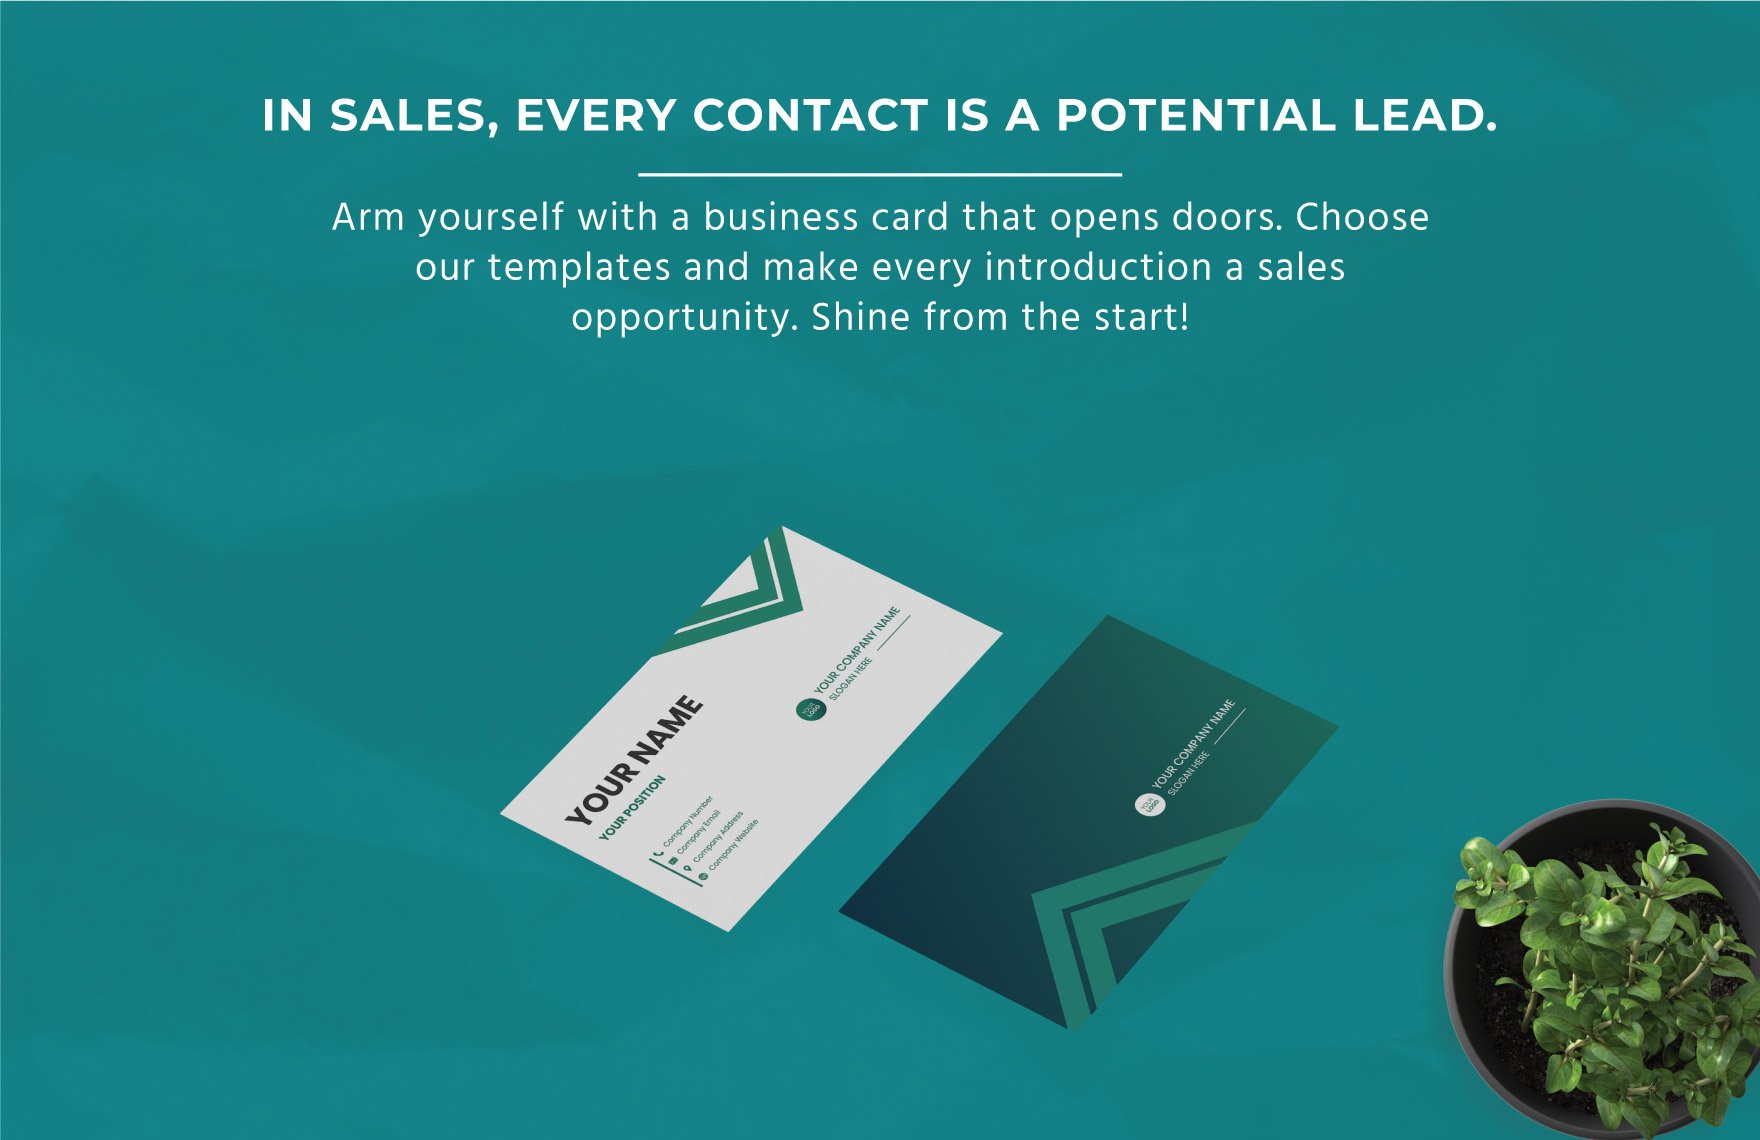 Sales Negotiator Business Card Template